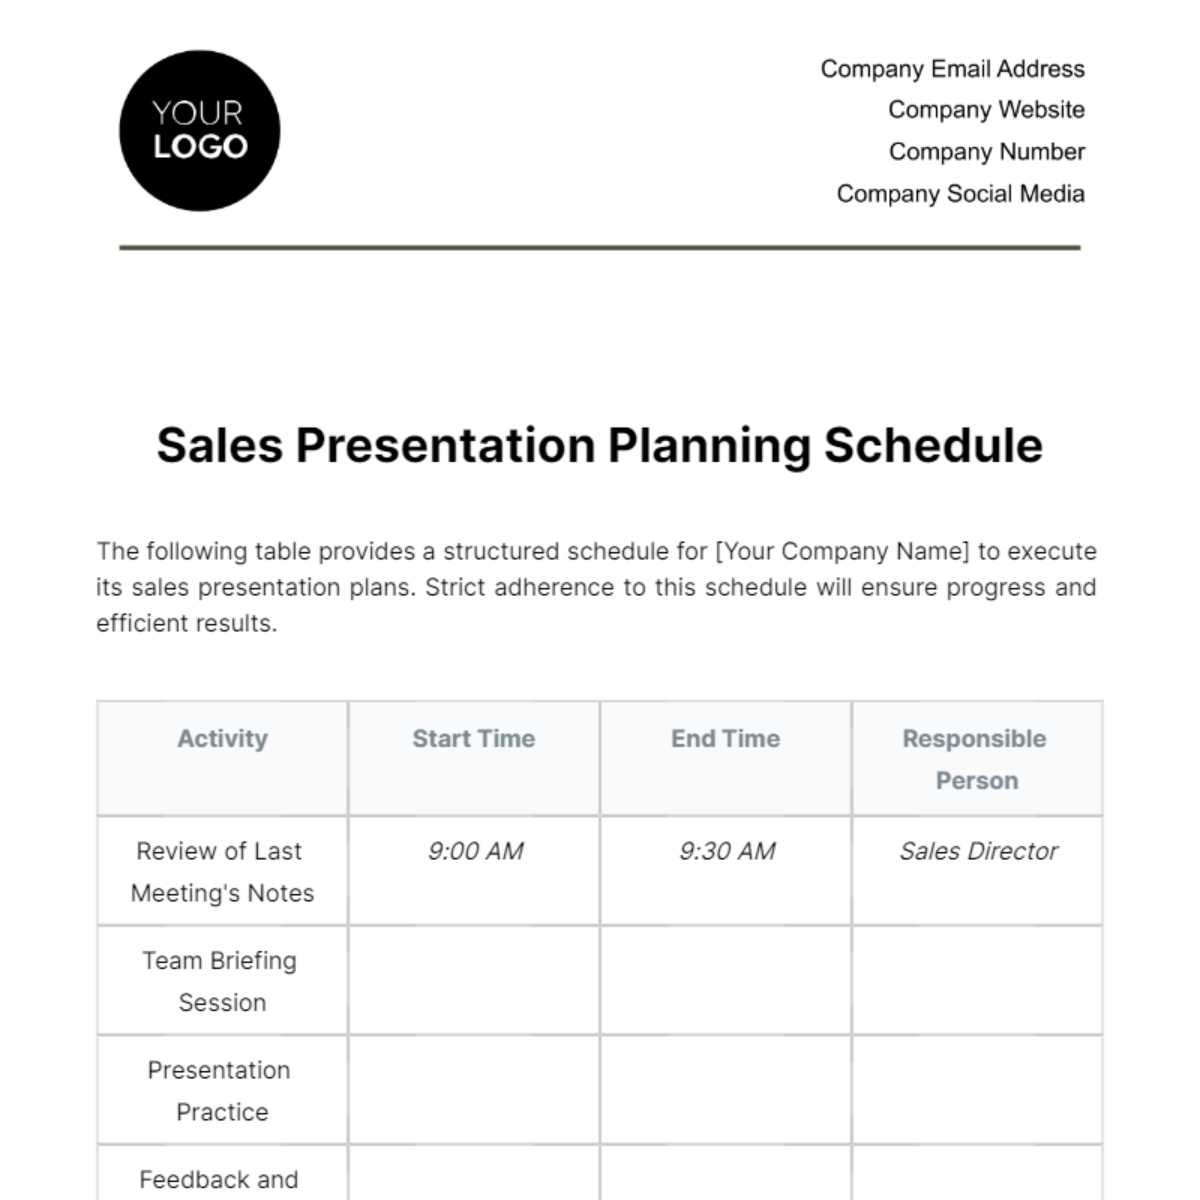 Free Sales Presentation Planning Schedule Template